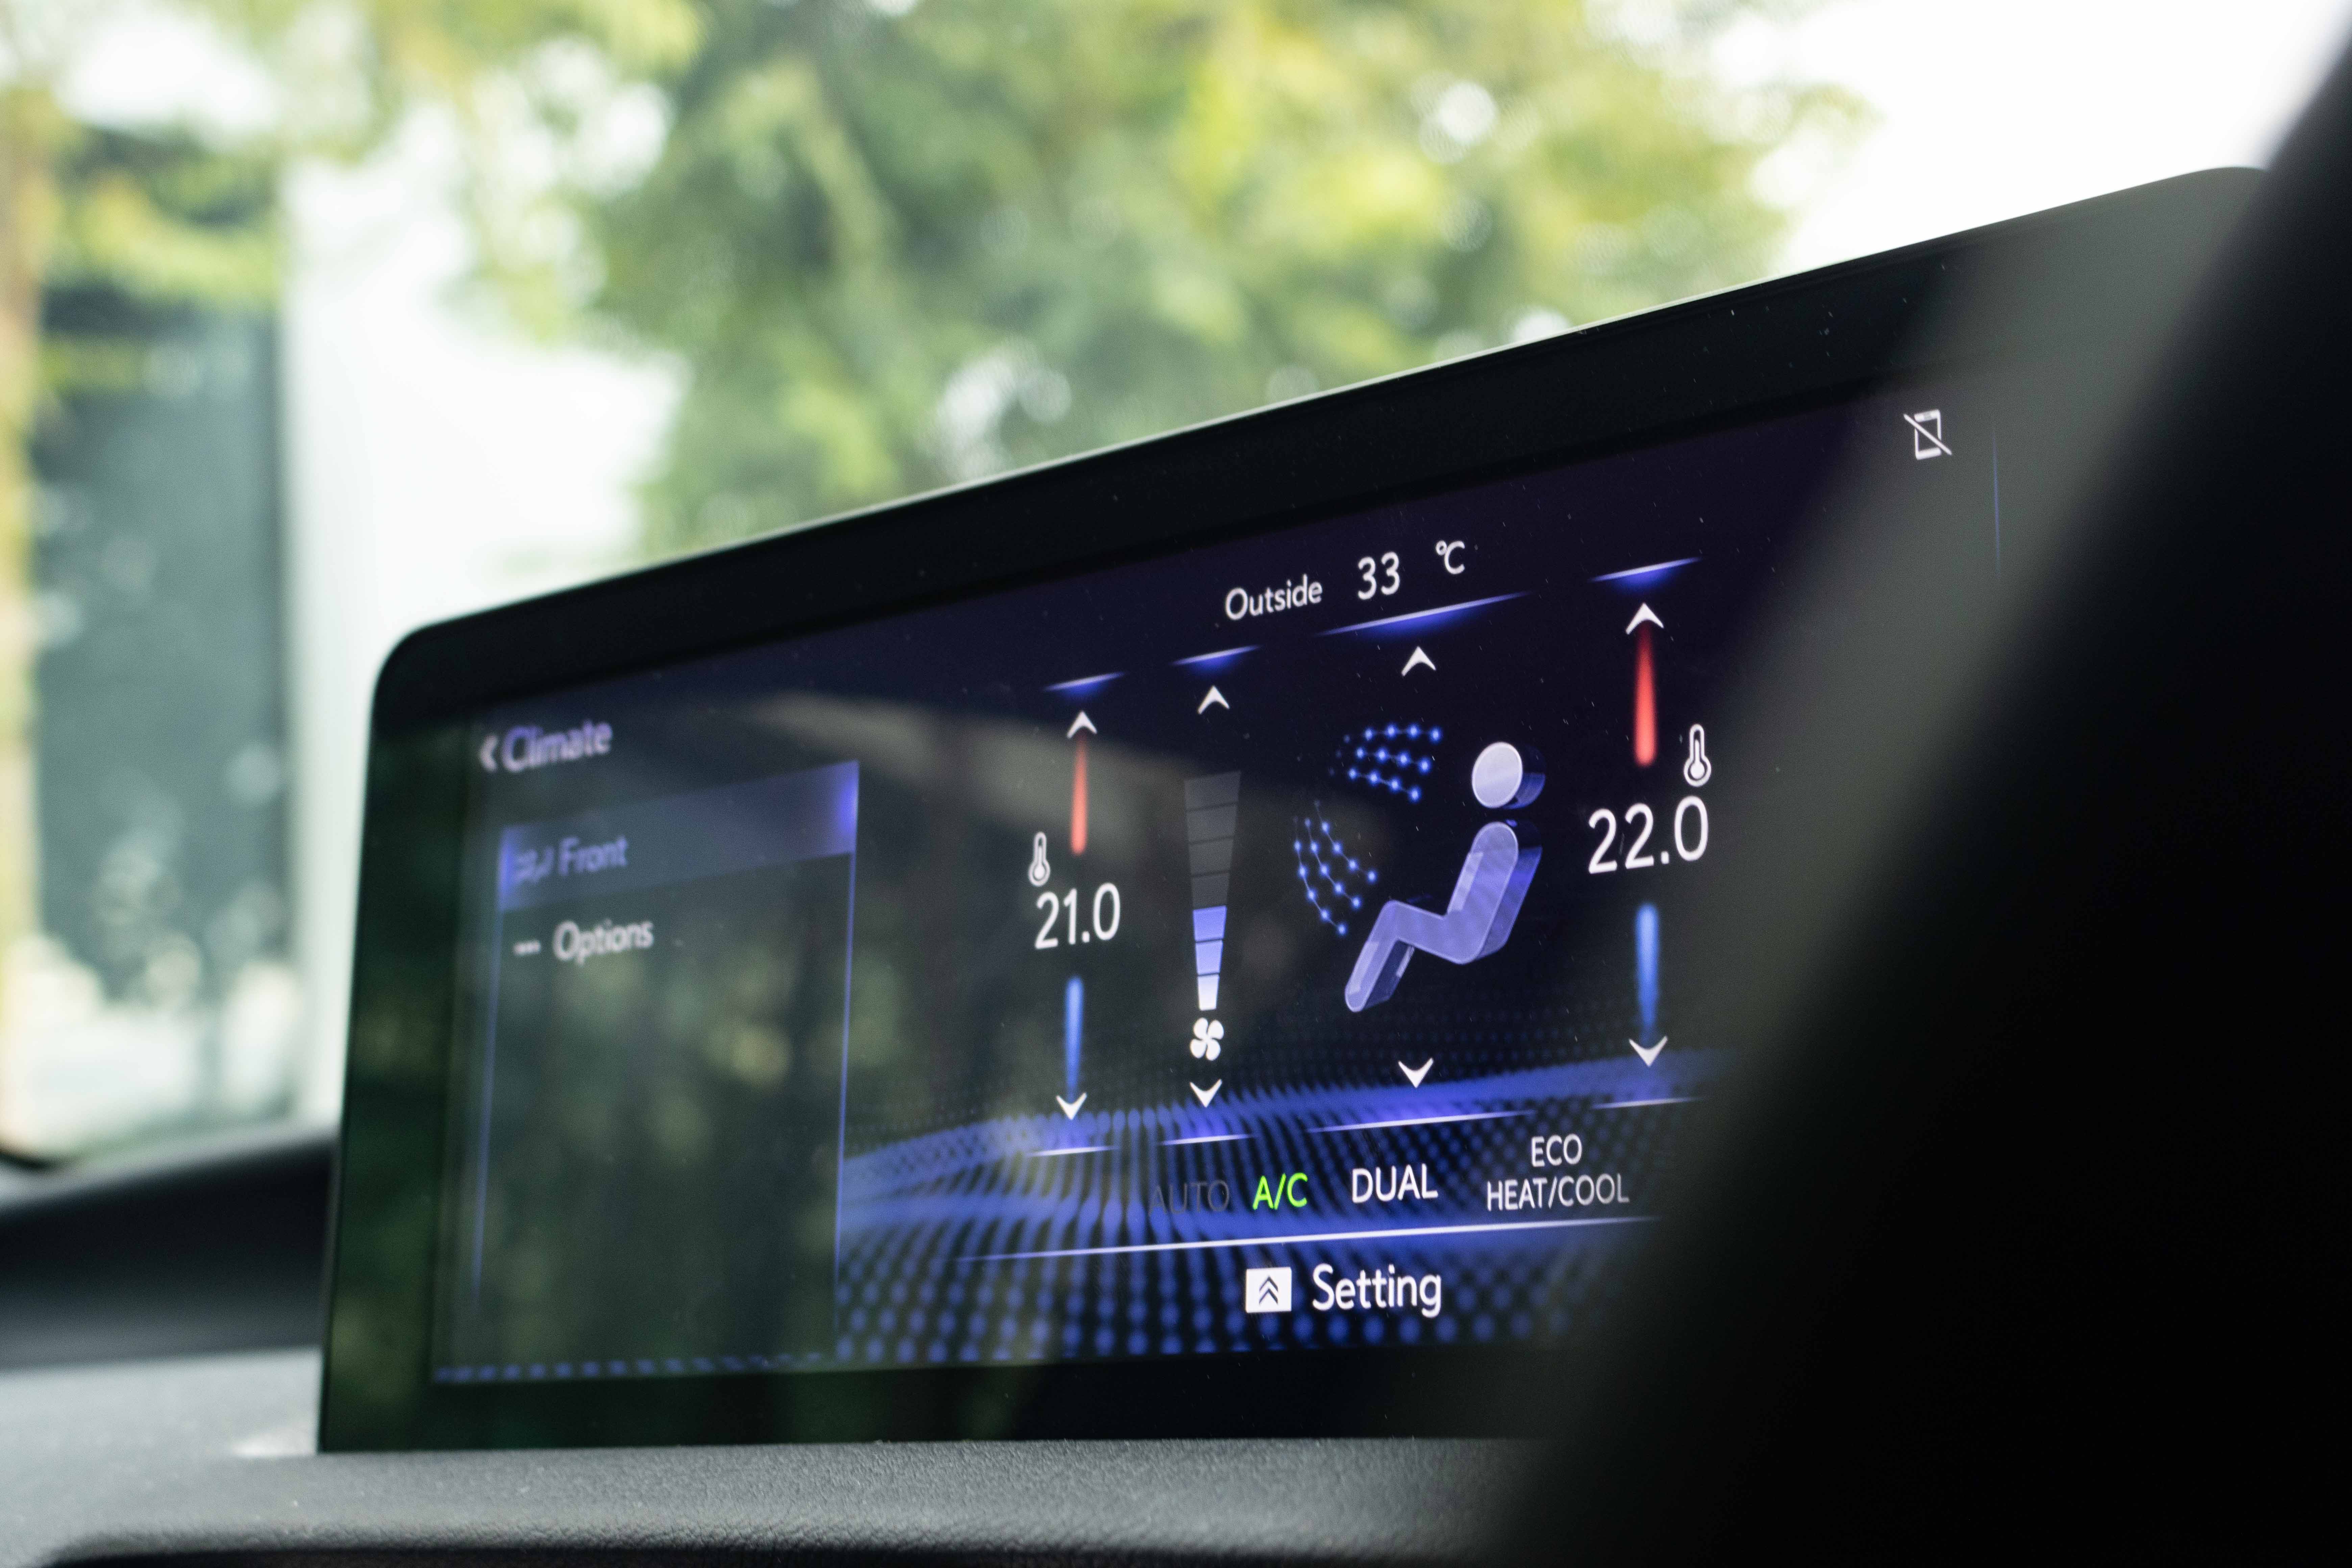 Lexus IS 300h Singapore - Infotainment screen